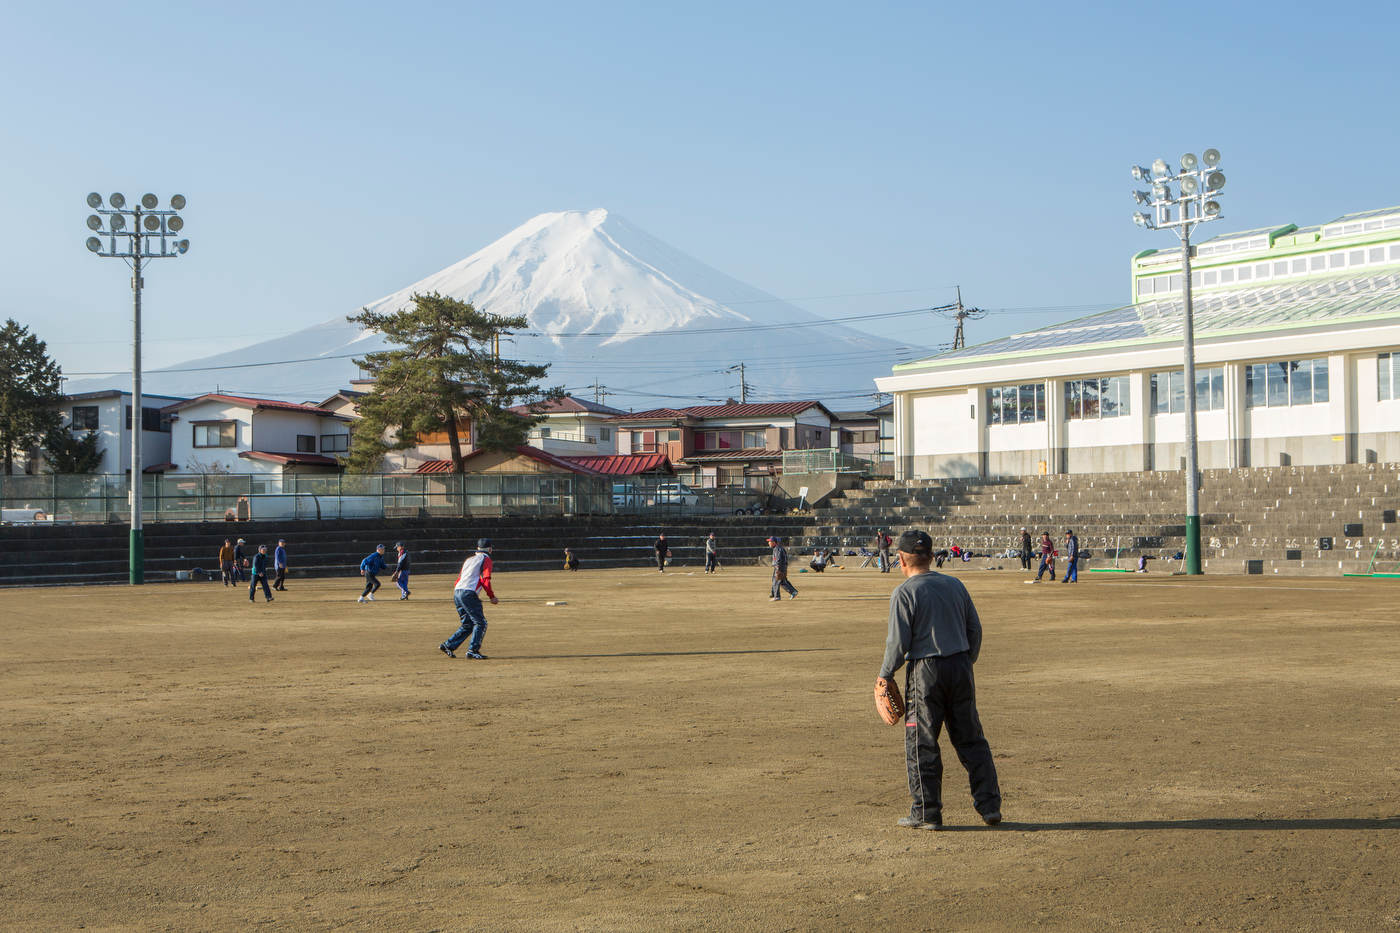 Retirees play baseball with Mt. Fuji as a backdrop.